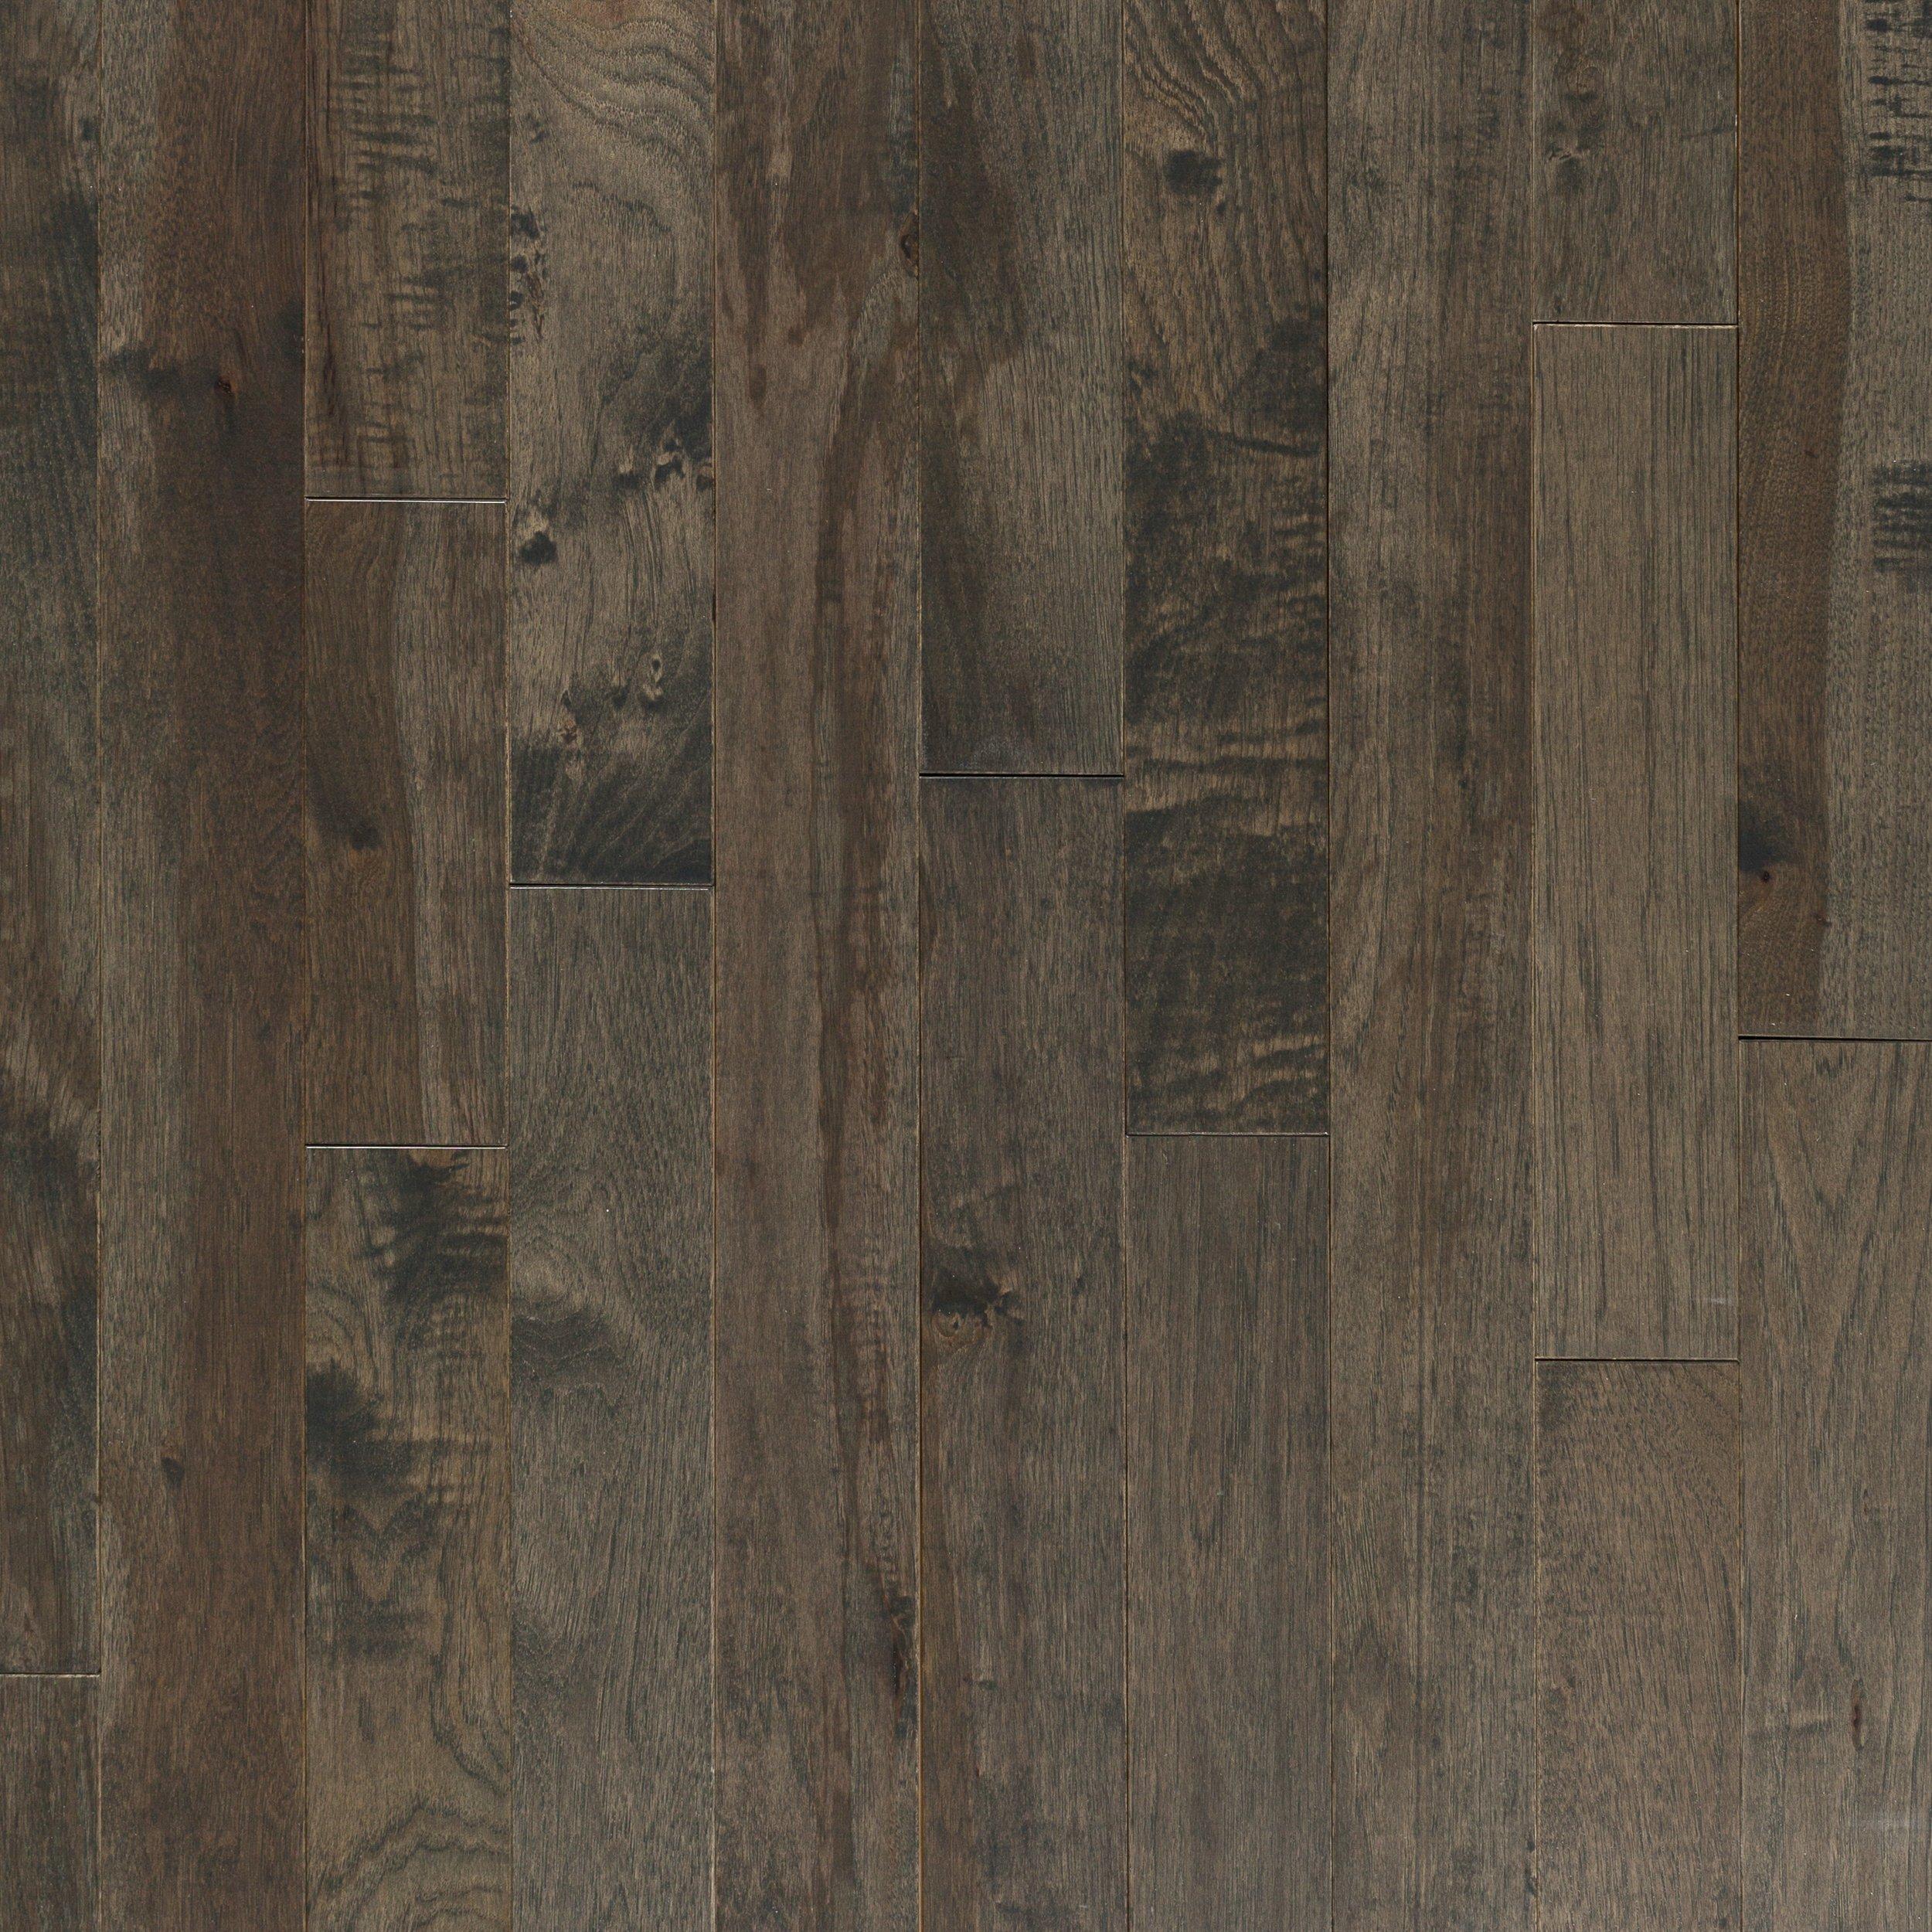 Gray Hickory Smooth Solid Hardwood, Decor Hardwood Floors